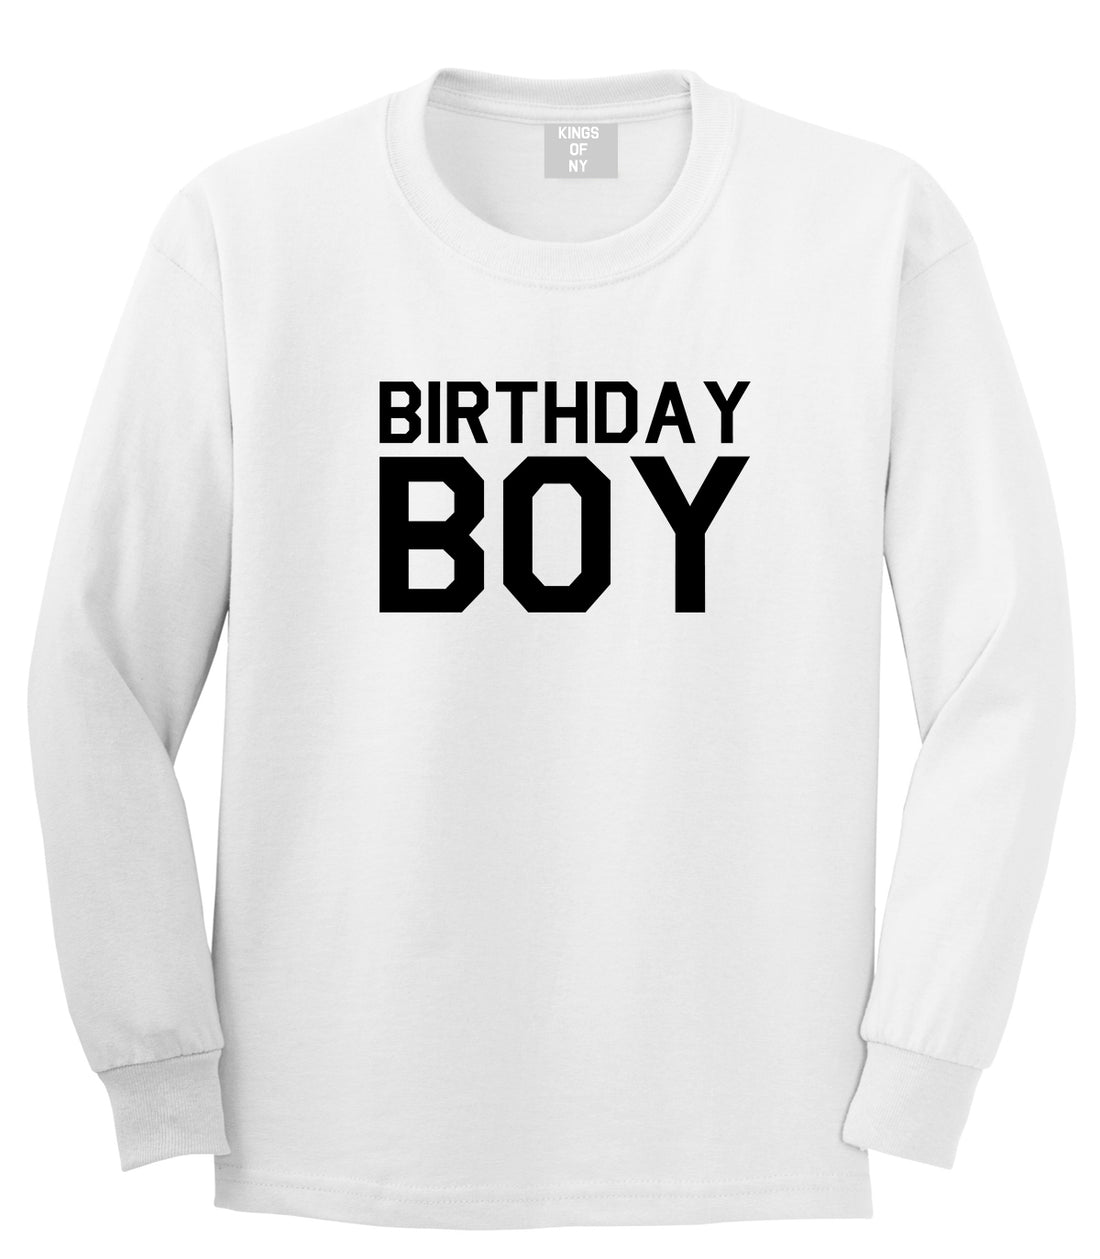 Birthday Boy White Long Sleeve T-Shirt by Kings Of NY